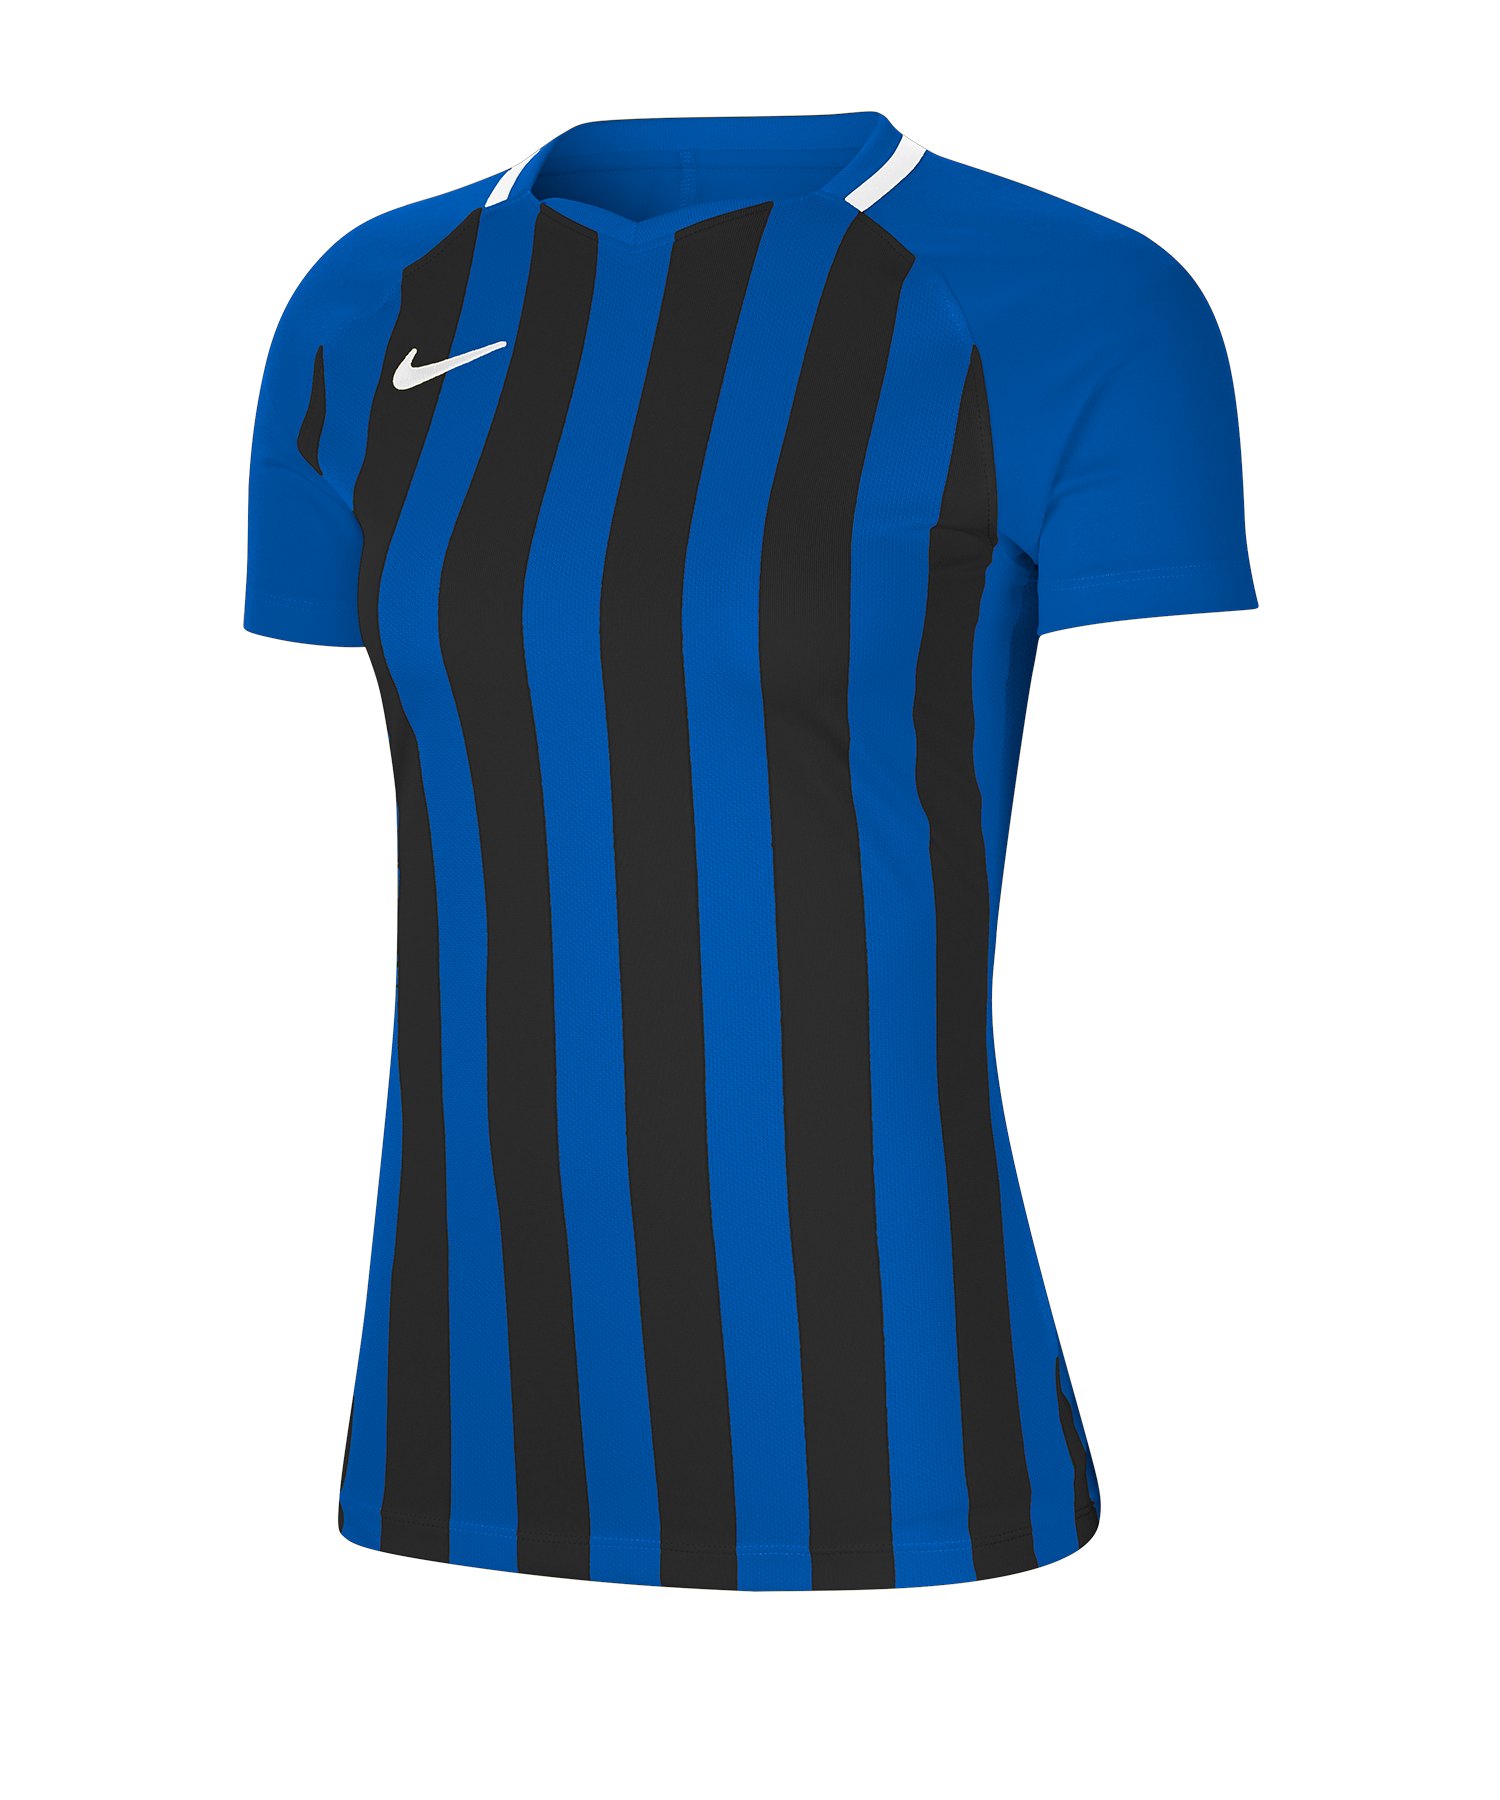 Nike Striped Division III Trikot KA Damen F463 - blau